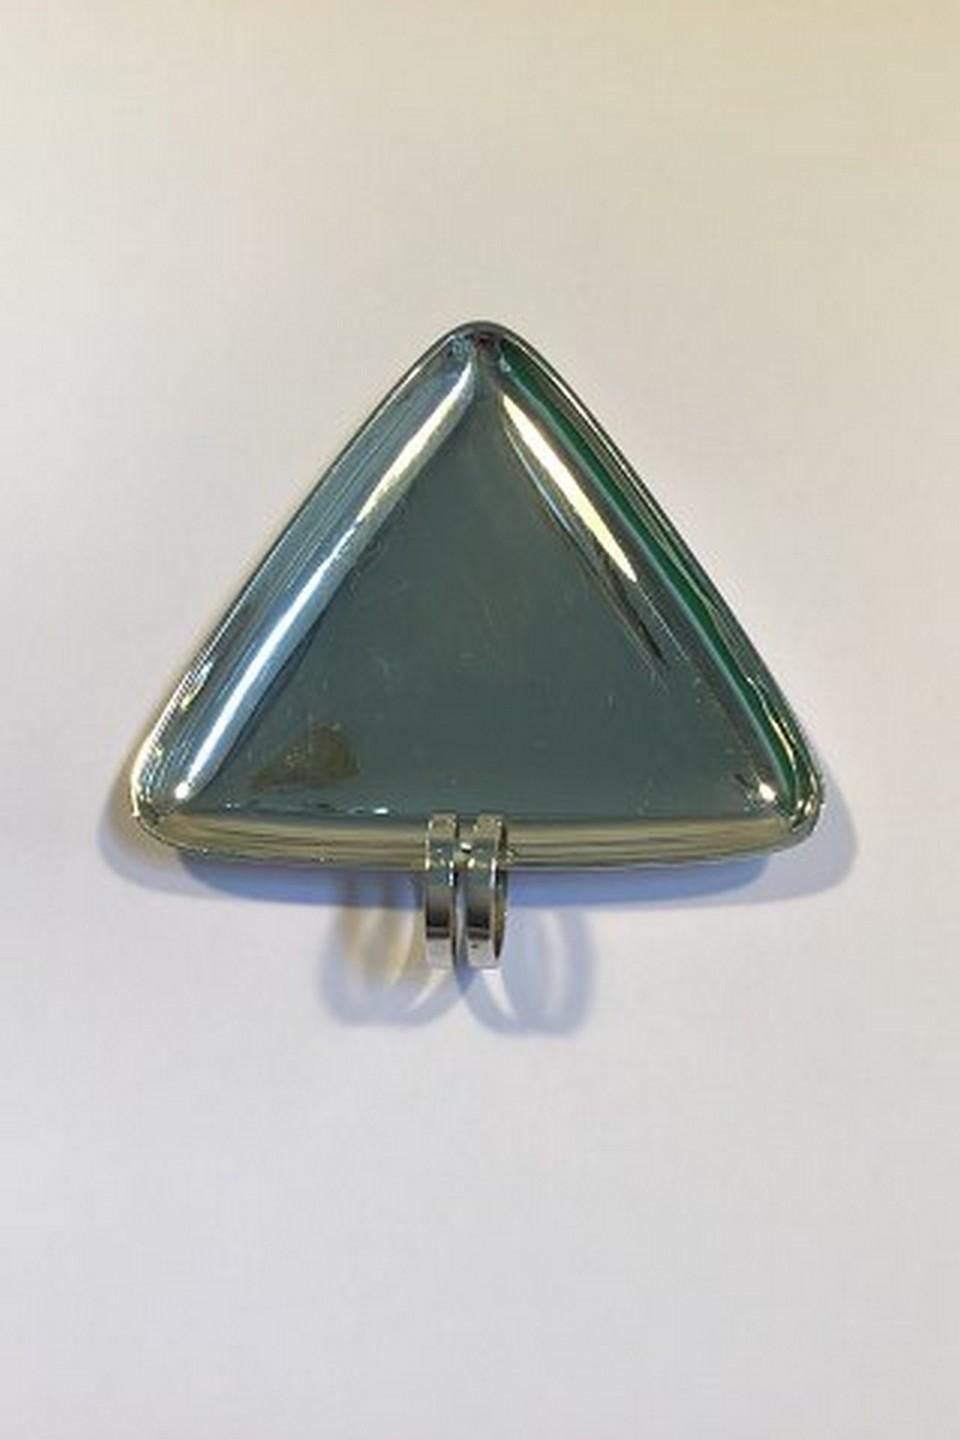 Hans Hansen sterling silver triangular dish (8.5 cm x 8.5 cm x 8.5 cm/3.34